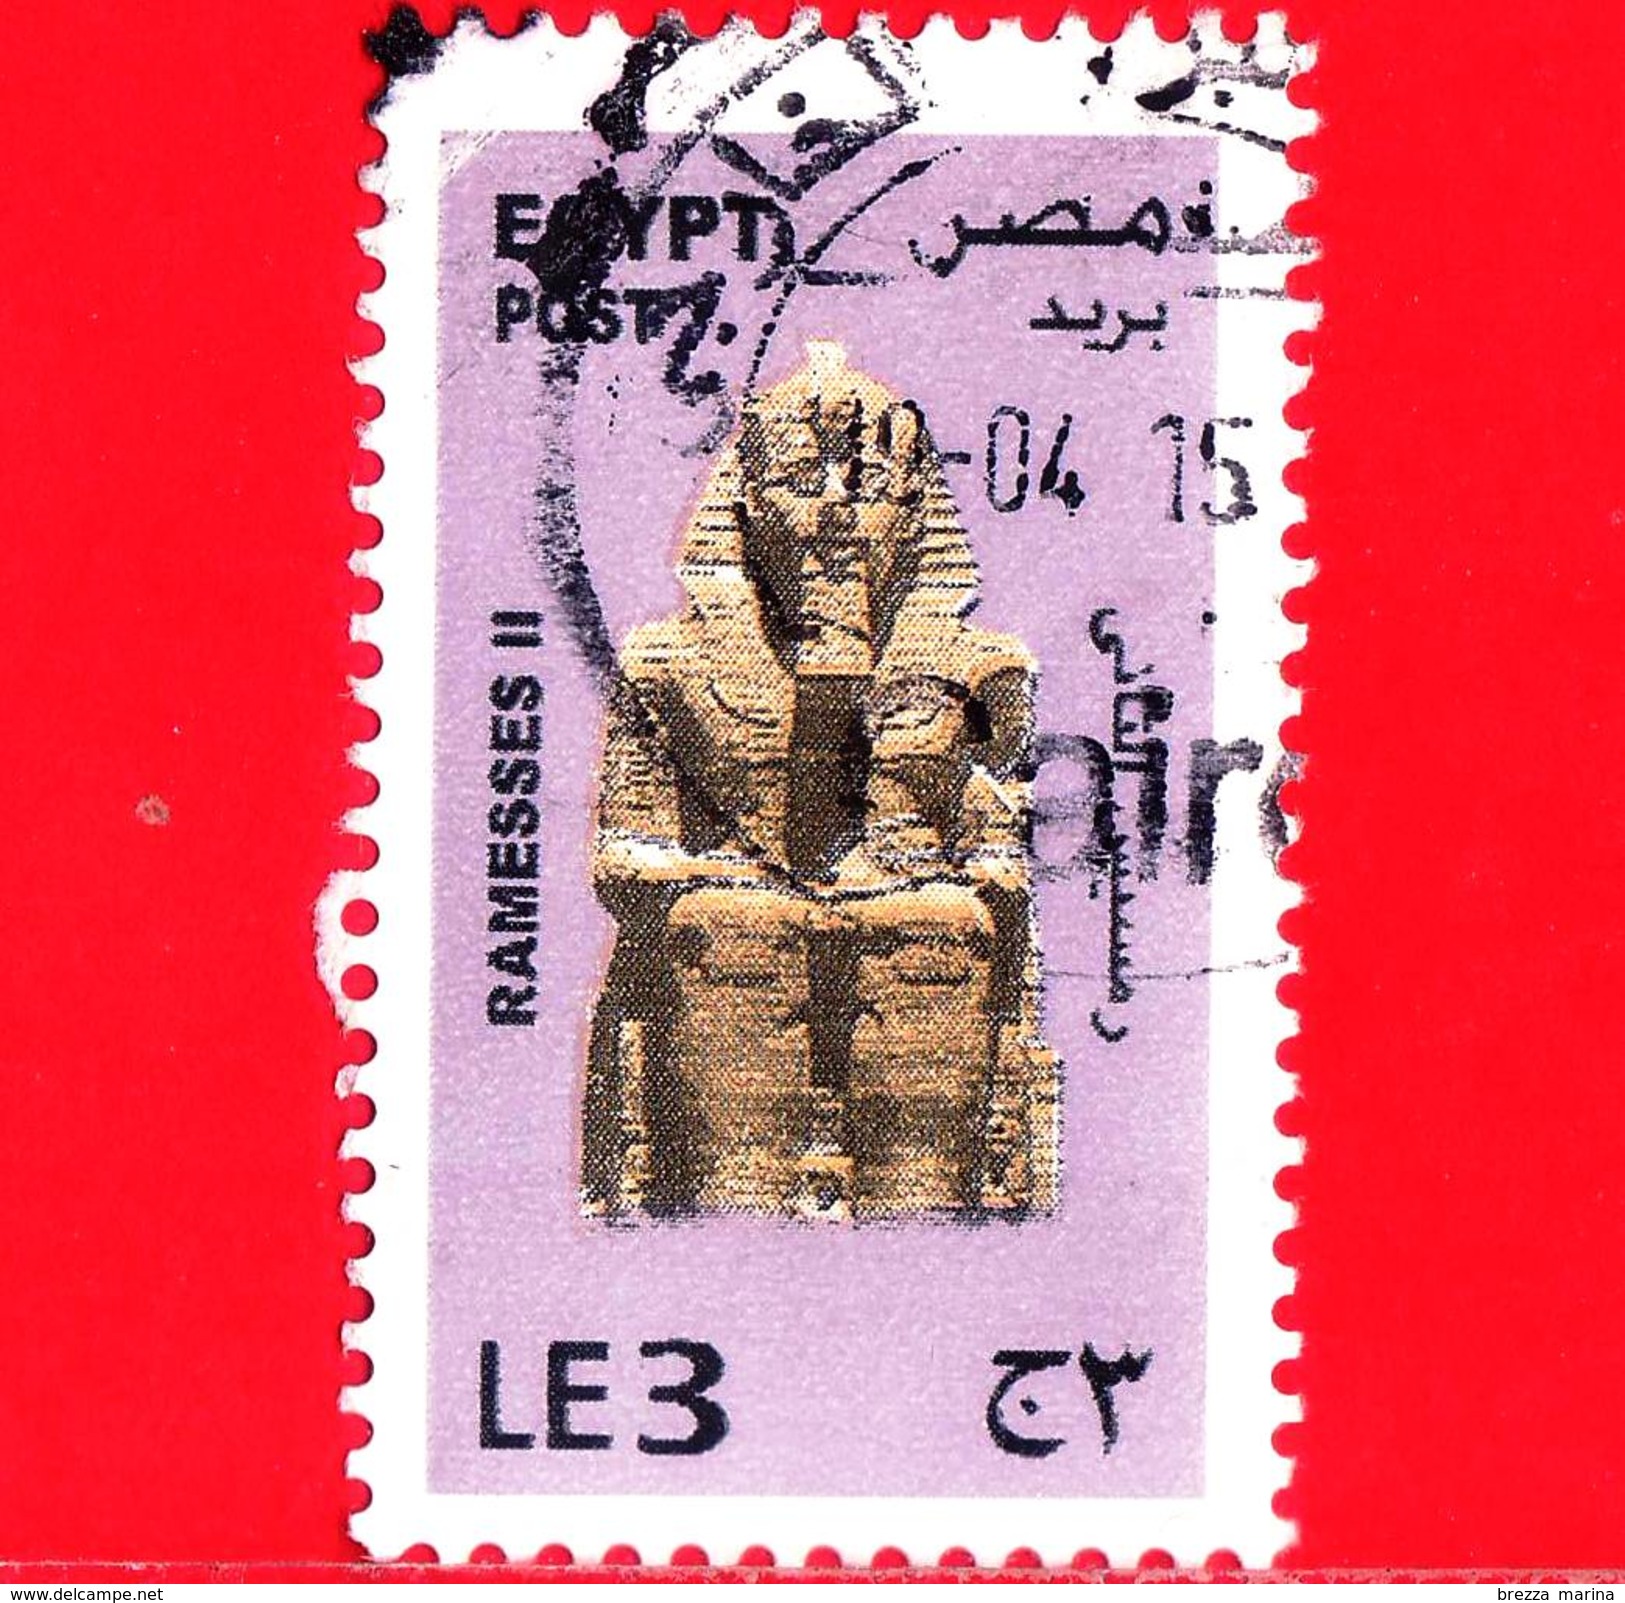 EGITTO - Usato - 2013 - Archeologia - Faraone Ramses II - 3 - Usati